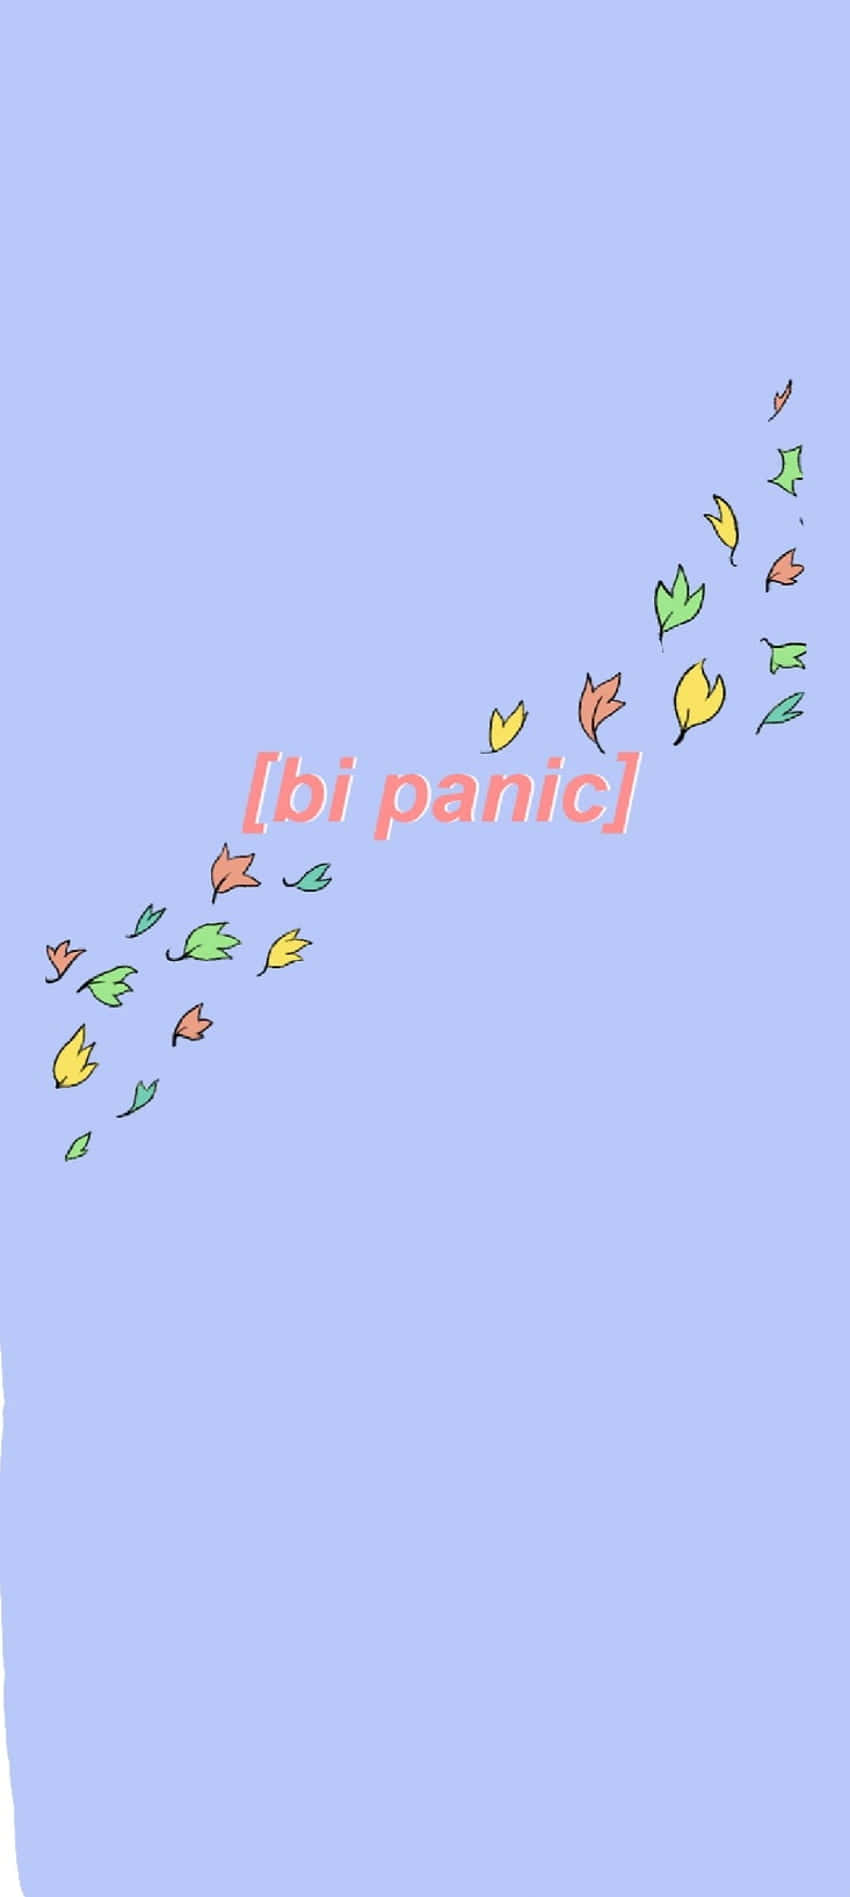 Bisexual Panic Profile Picture Wallpaper